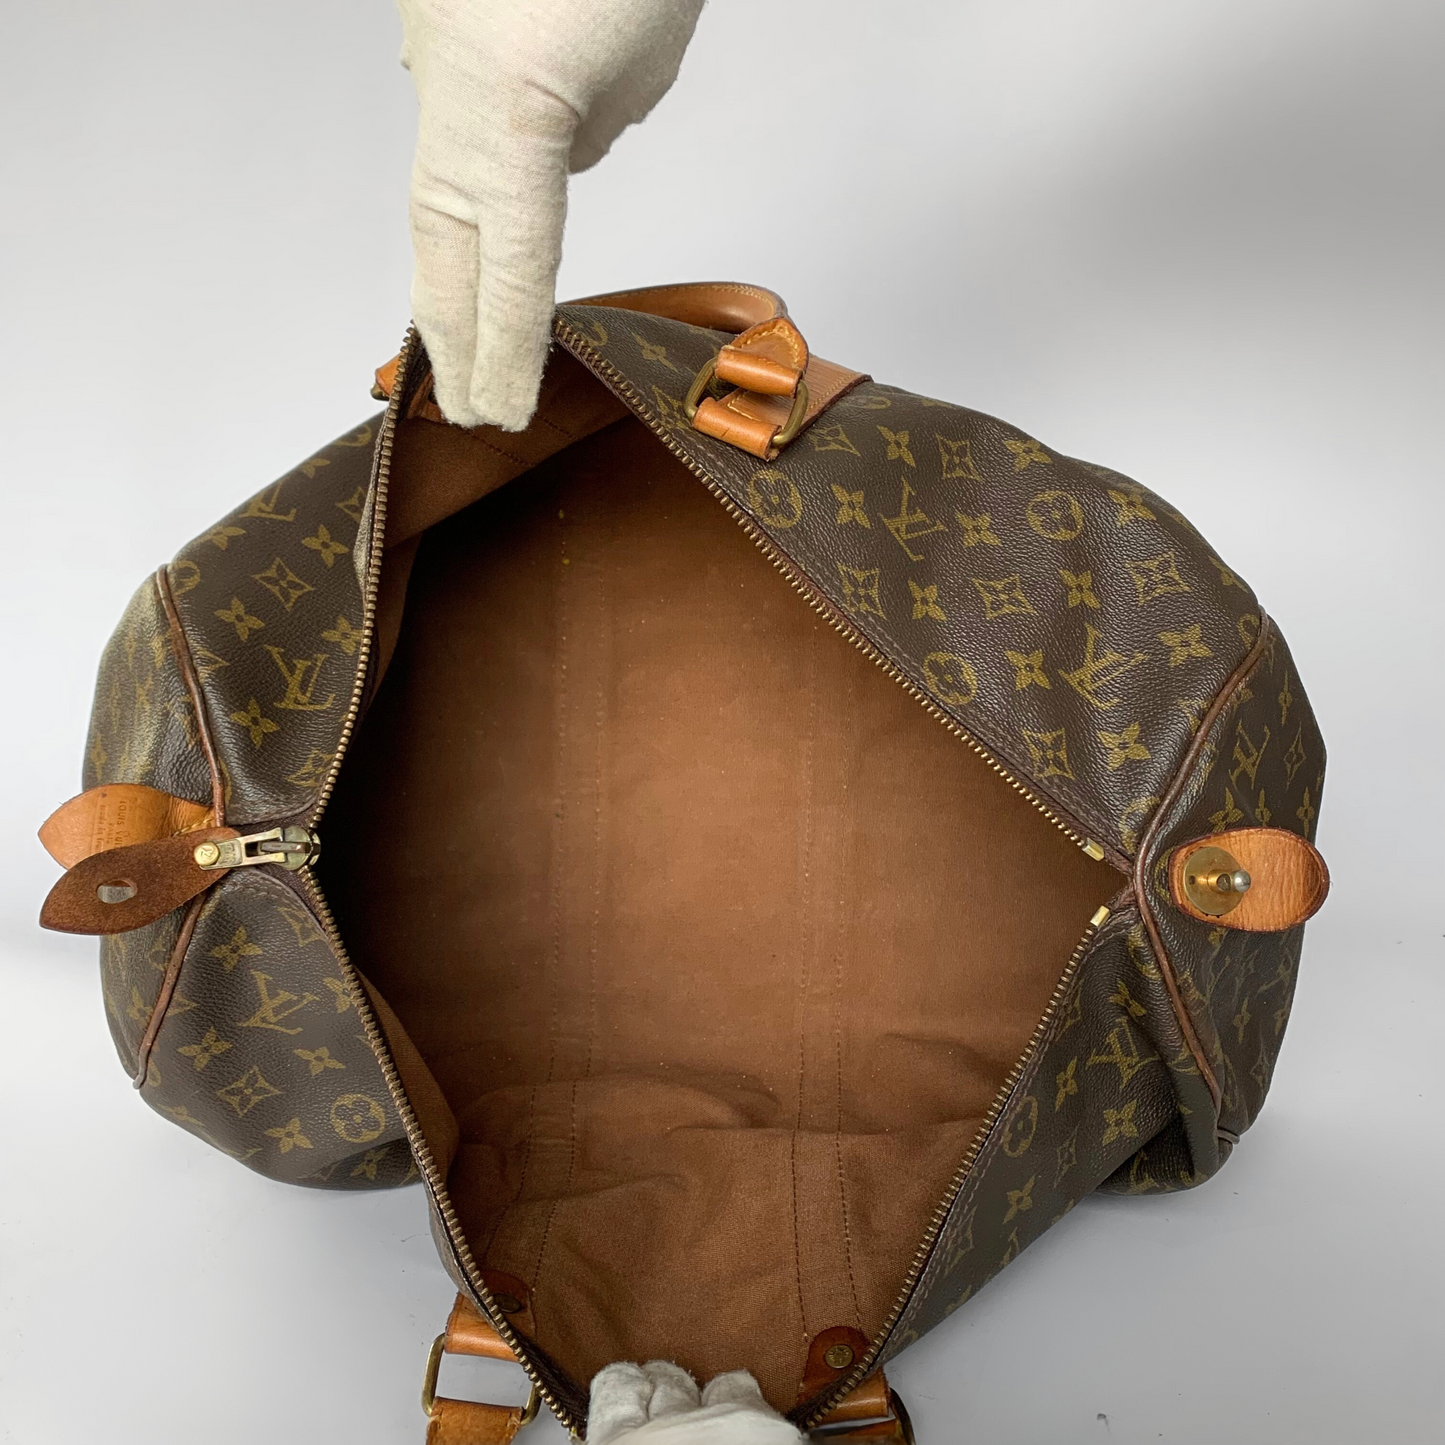 Louis Vuitton Louis Vuitton Keepall 45 Monogram Canvas - Handbags - Etoile Luxury Vintage